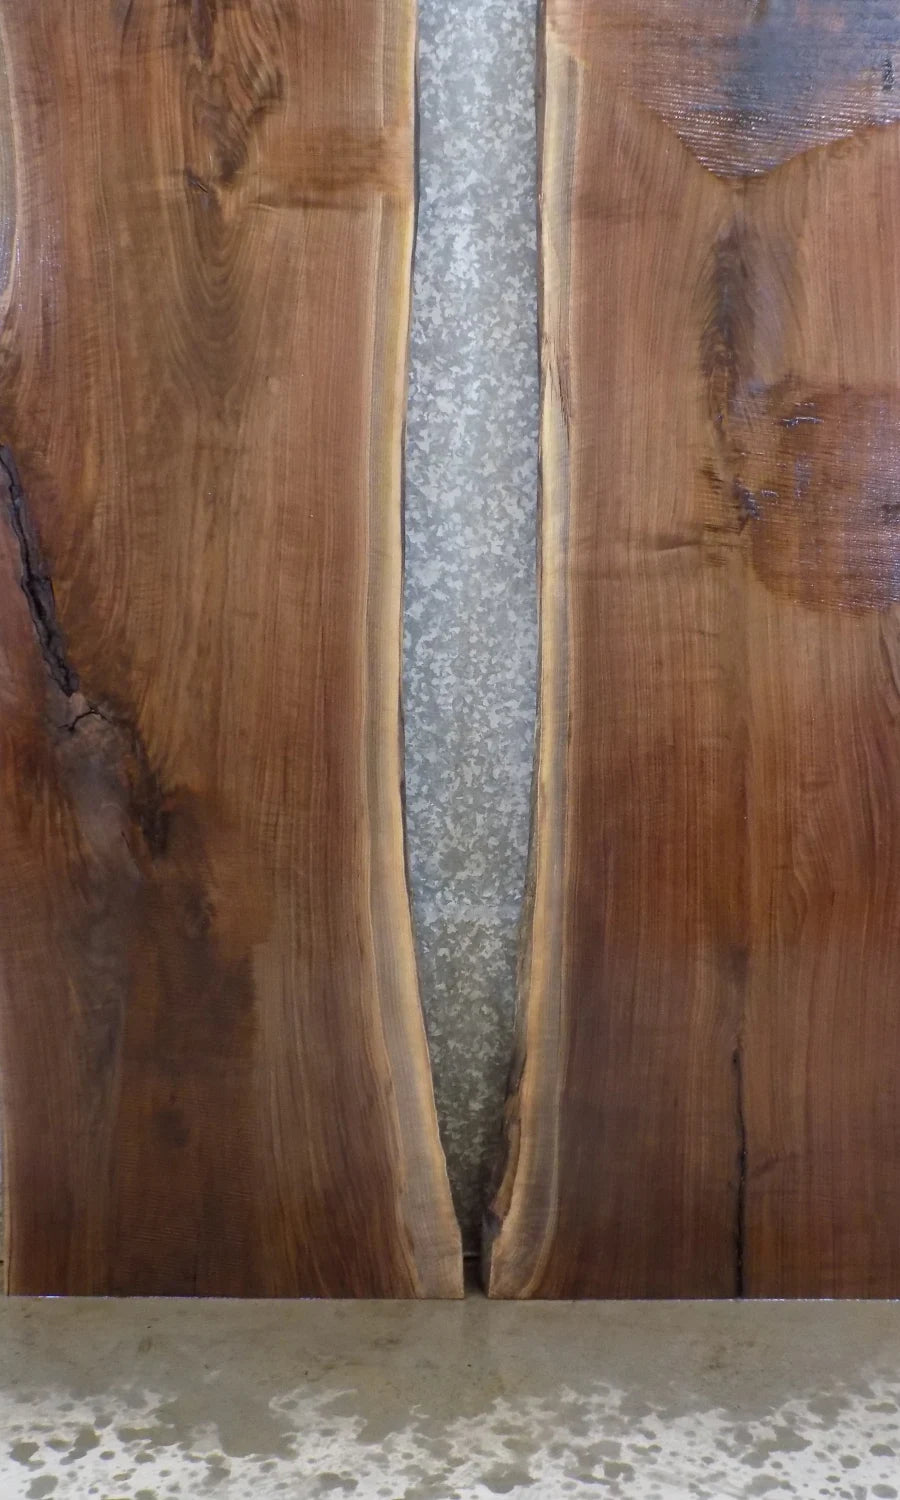 2- Rustic Black Walnut Live Edge Dining Table Top Wood Slab 1013-1014